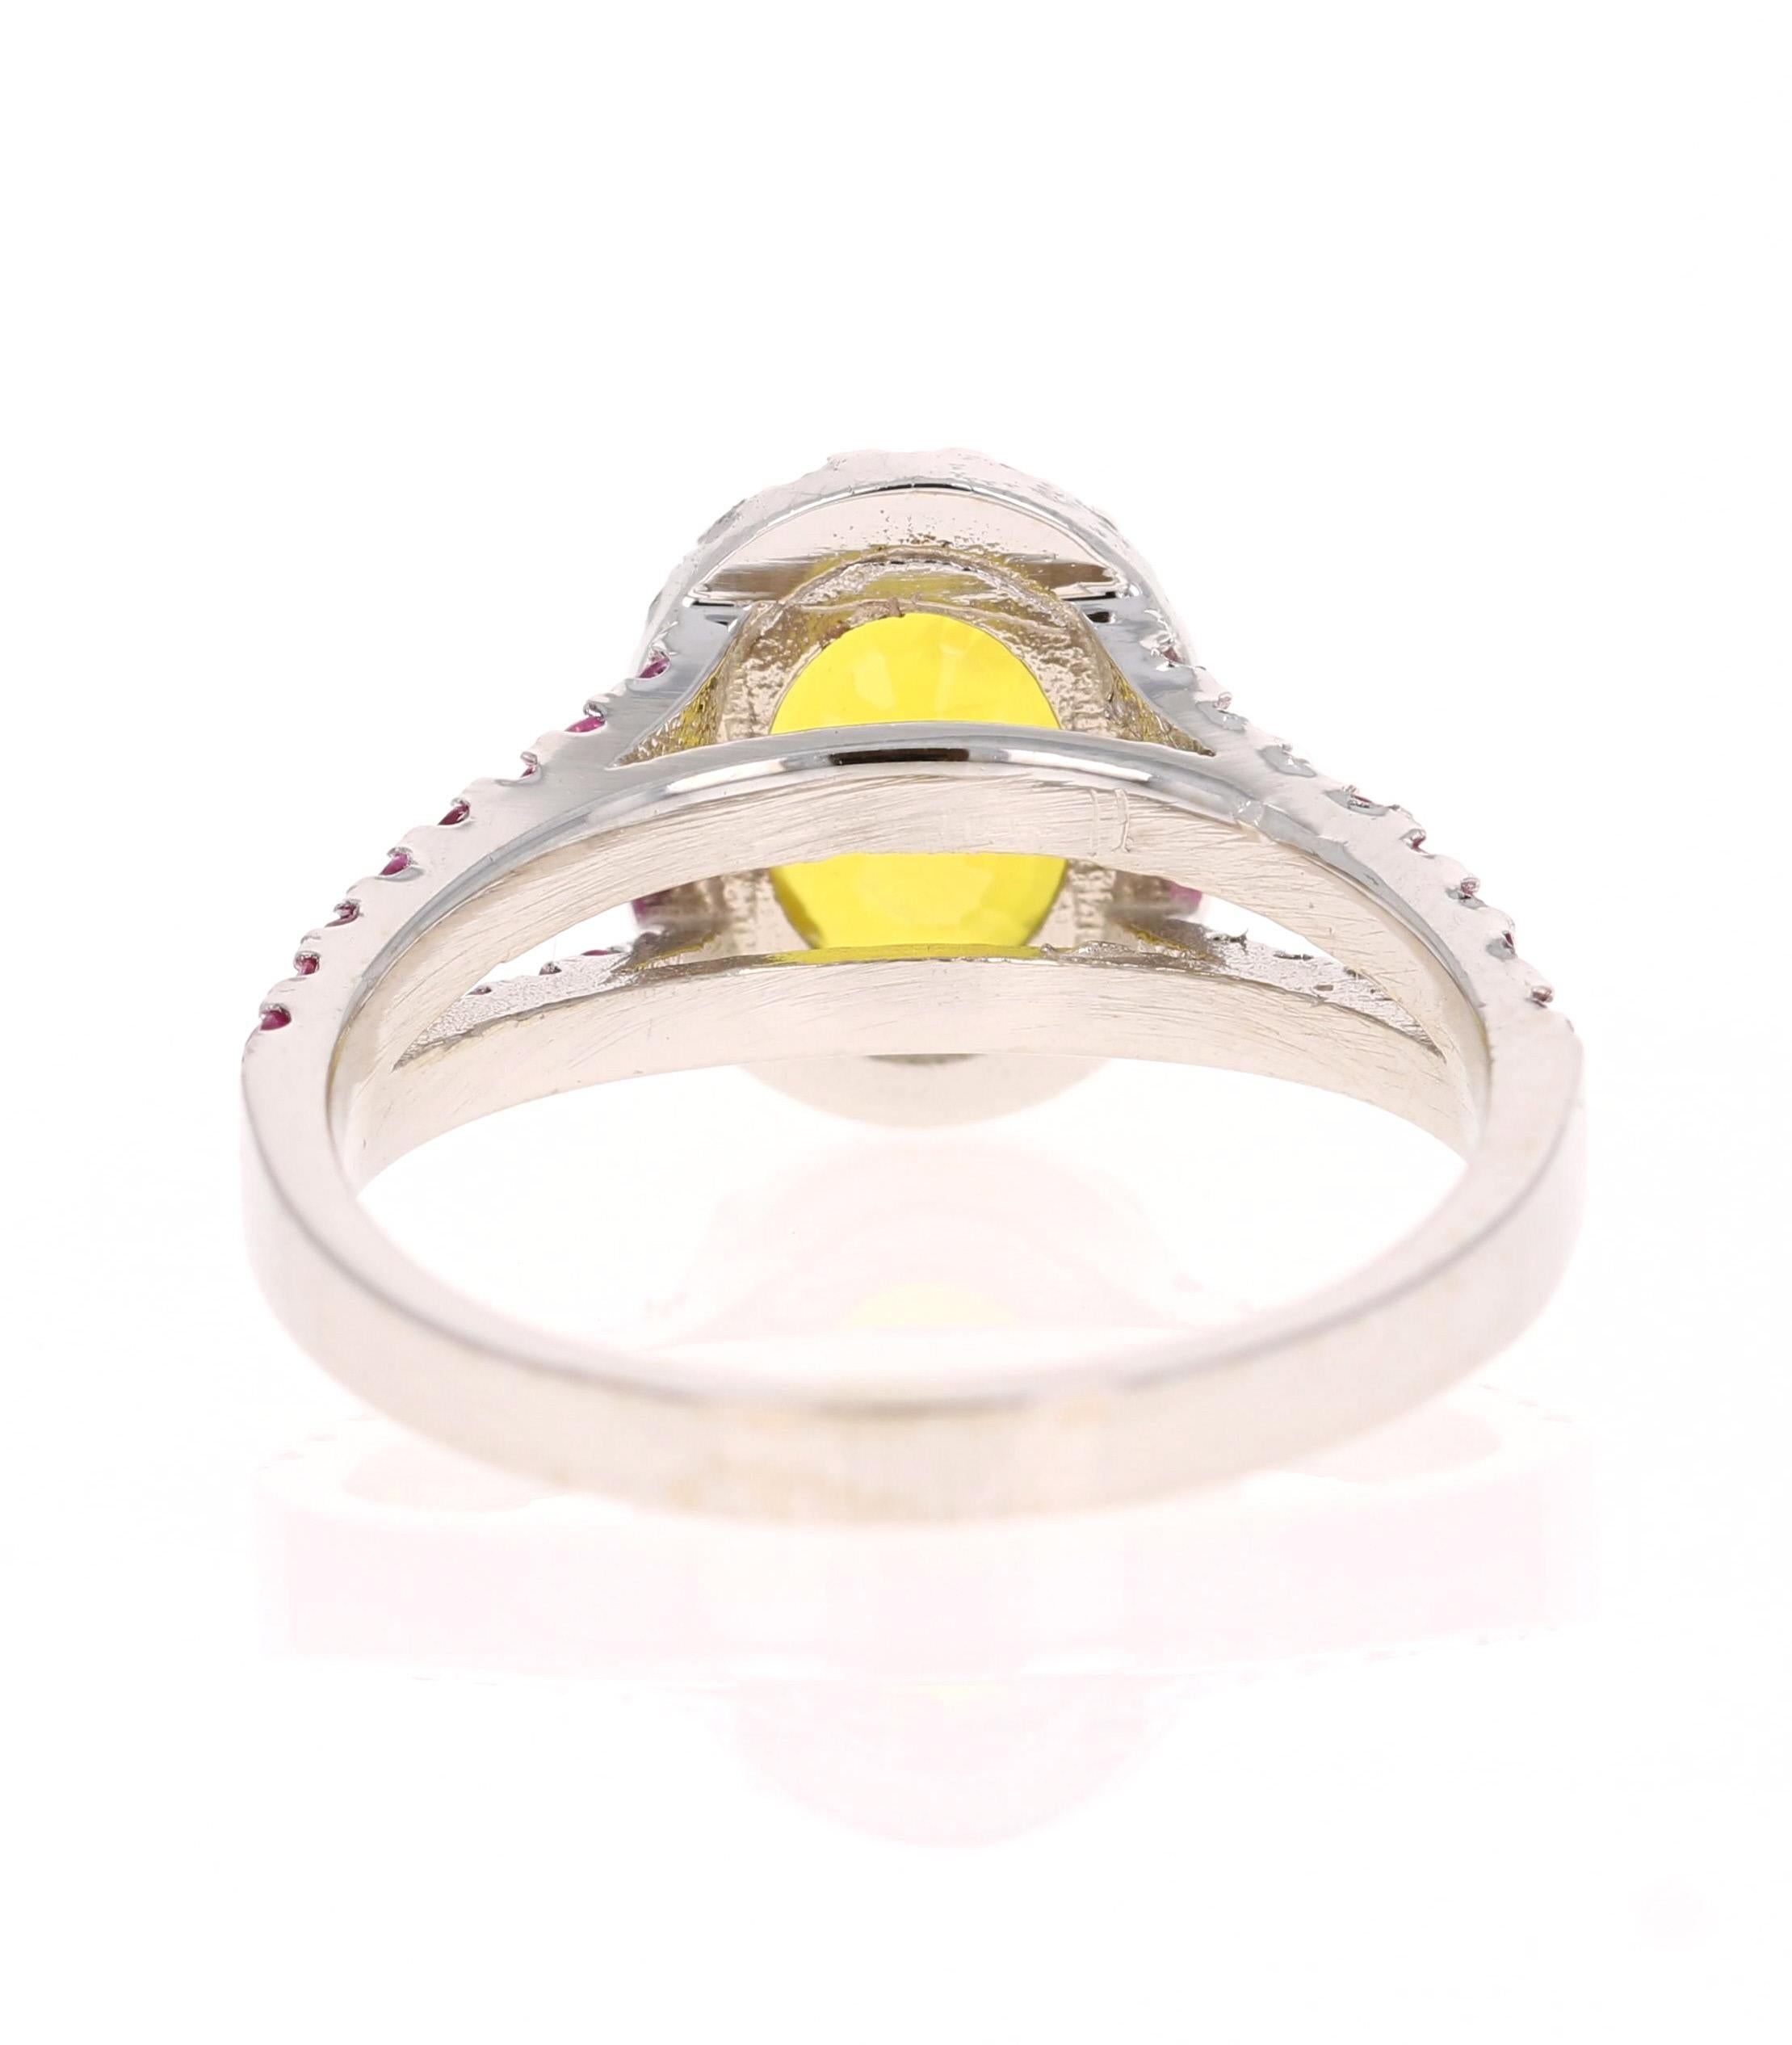 Oval Cut 3.06 Carat Yellow Sapphire Pink Sapphire Diamond 14 Karat White Gold Ring